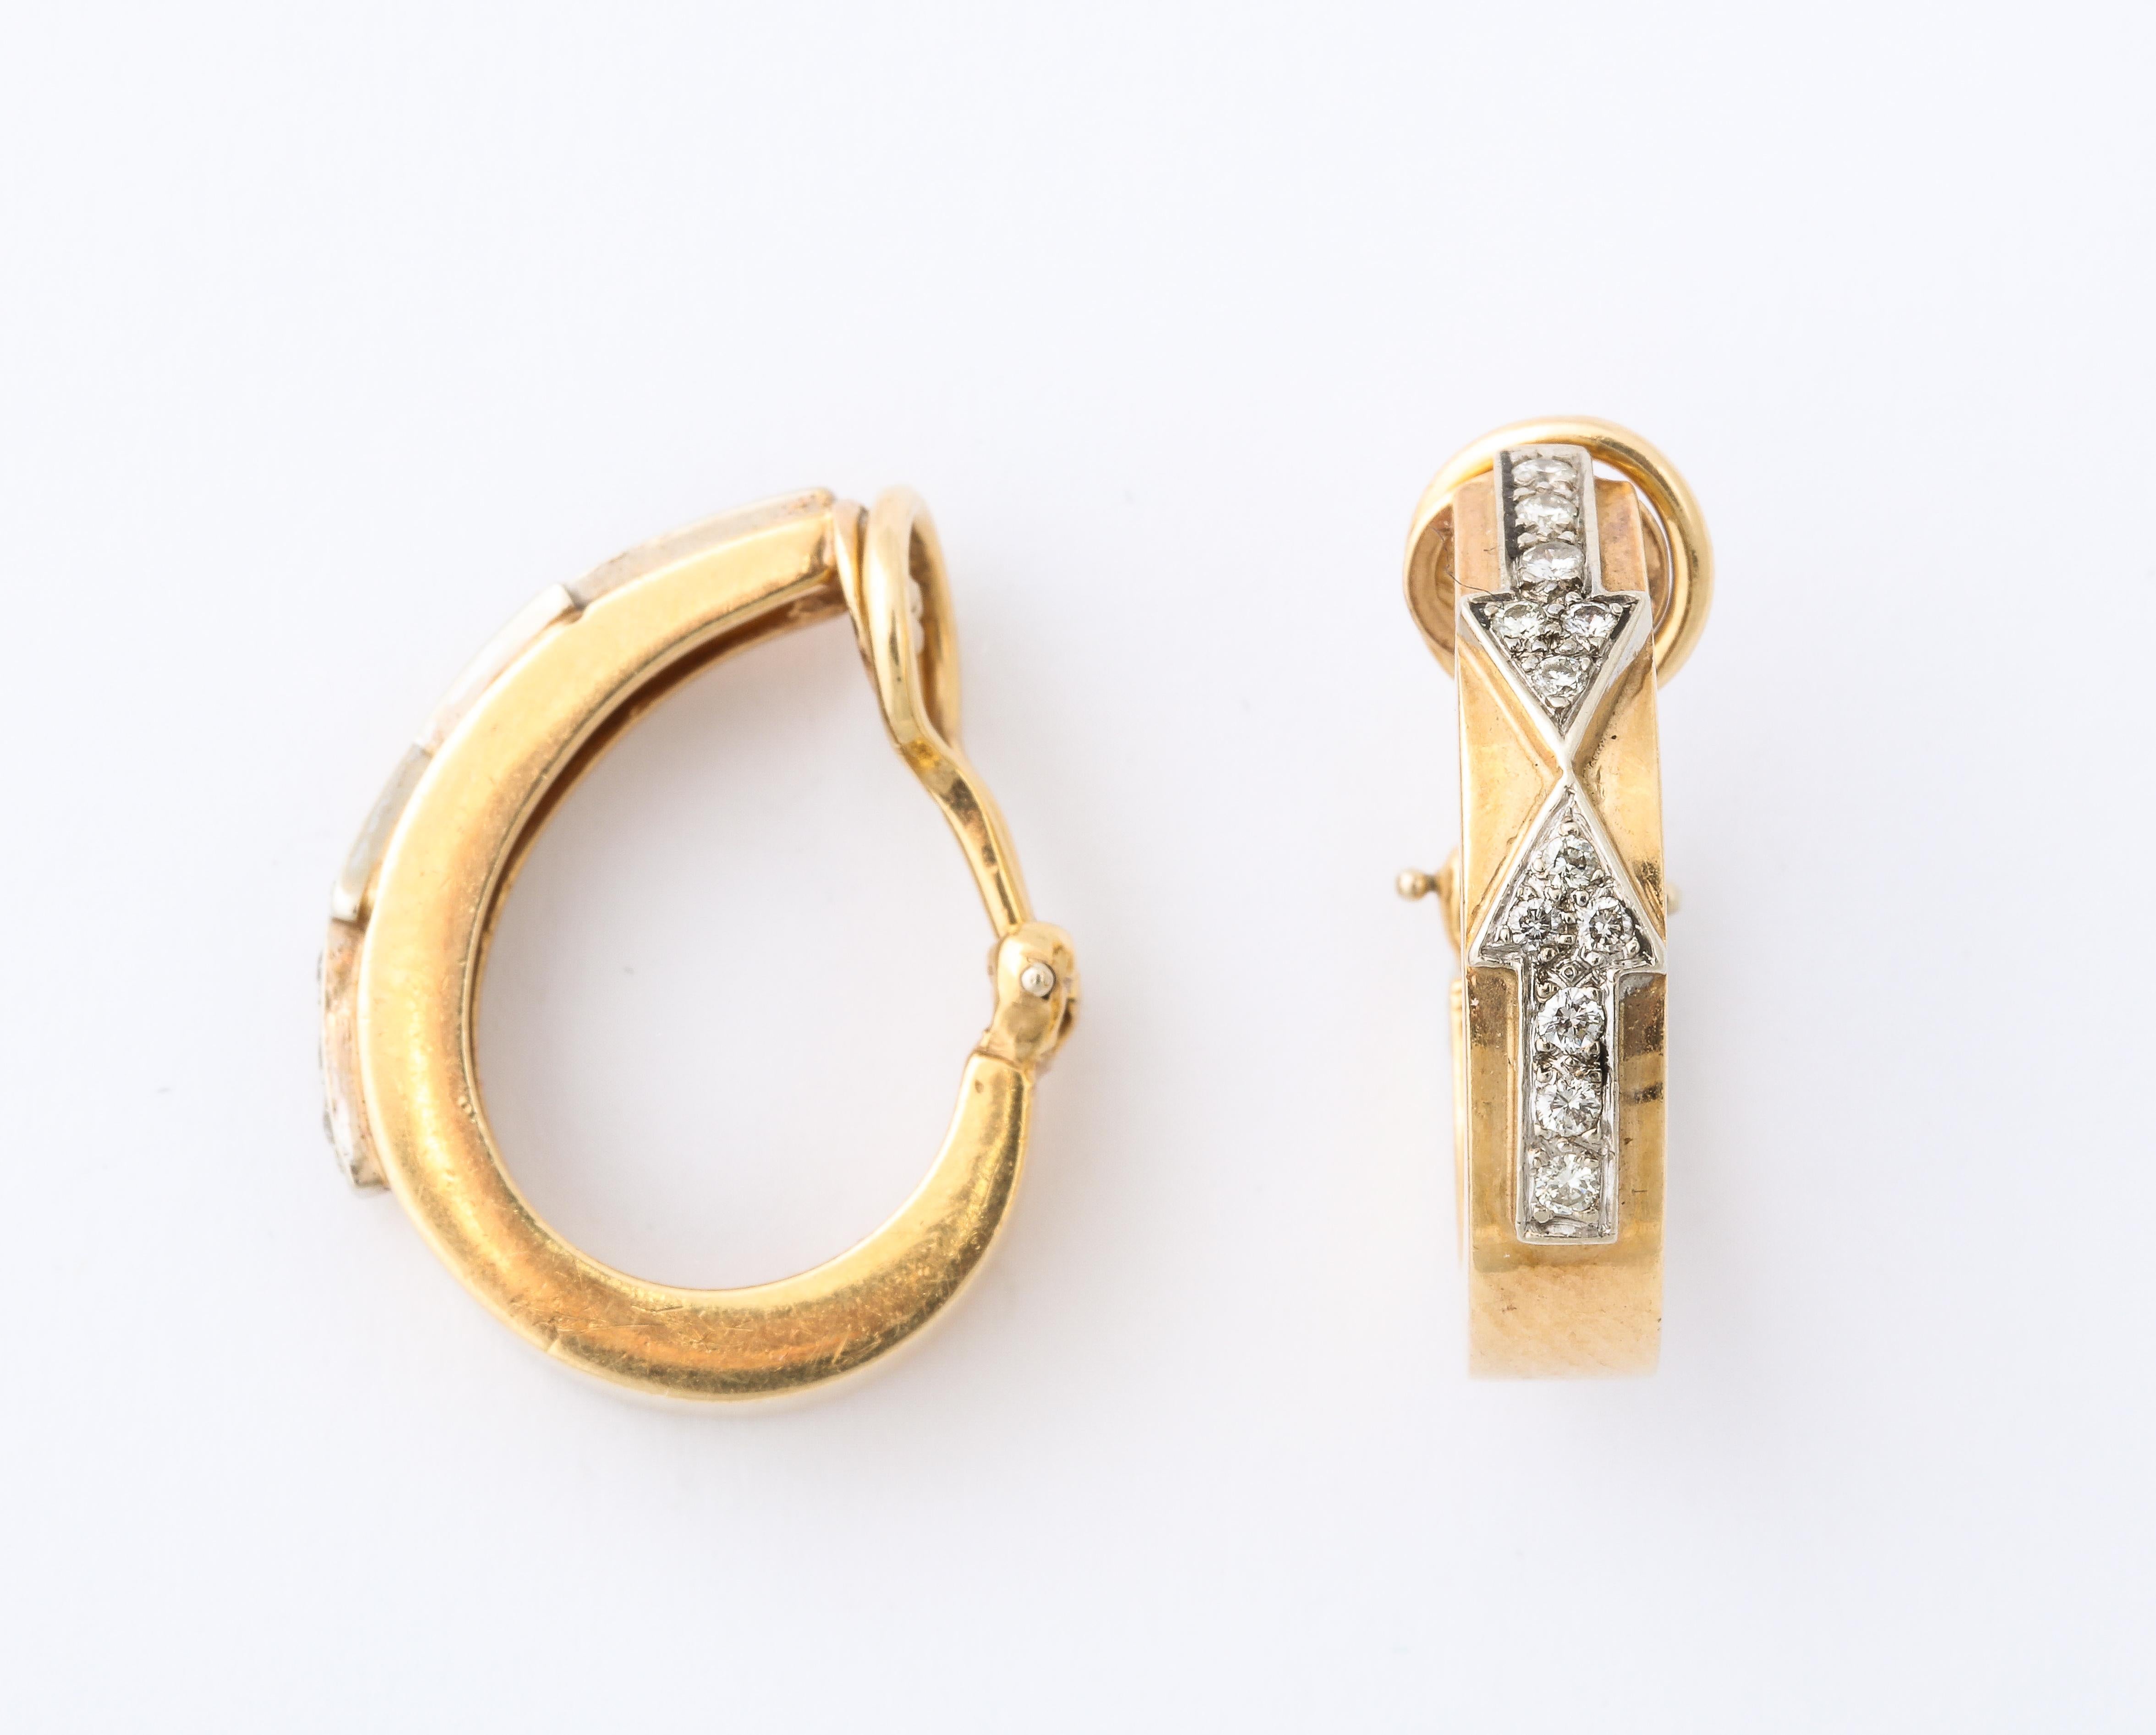 Post-War Retro Arrow Design Diamond and Gold Hoop Earrings by Hammerman